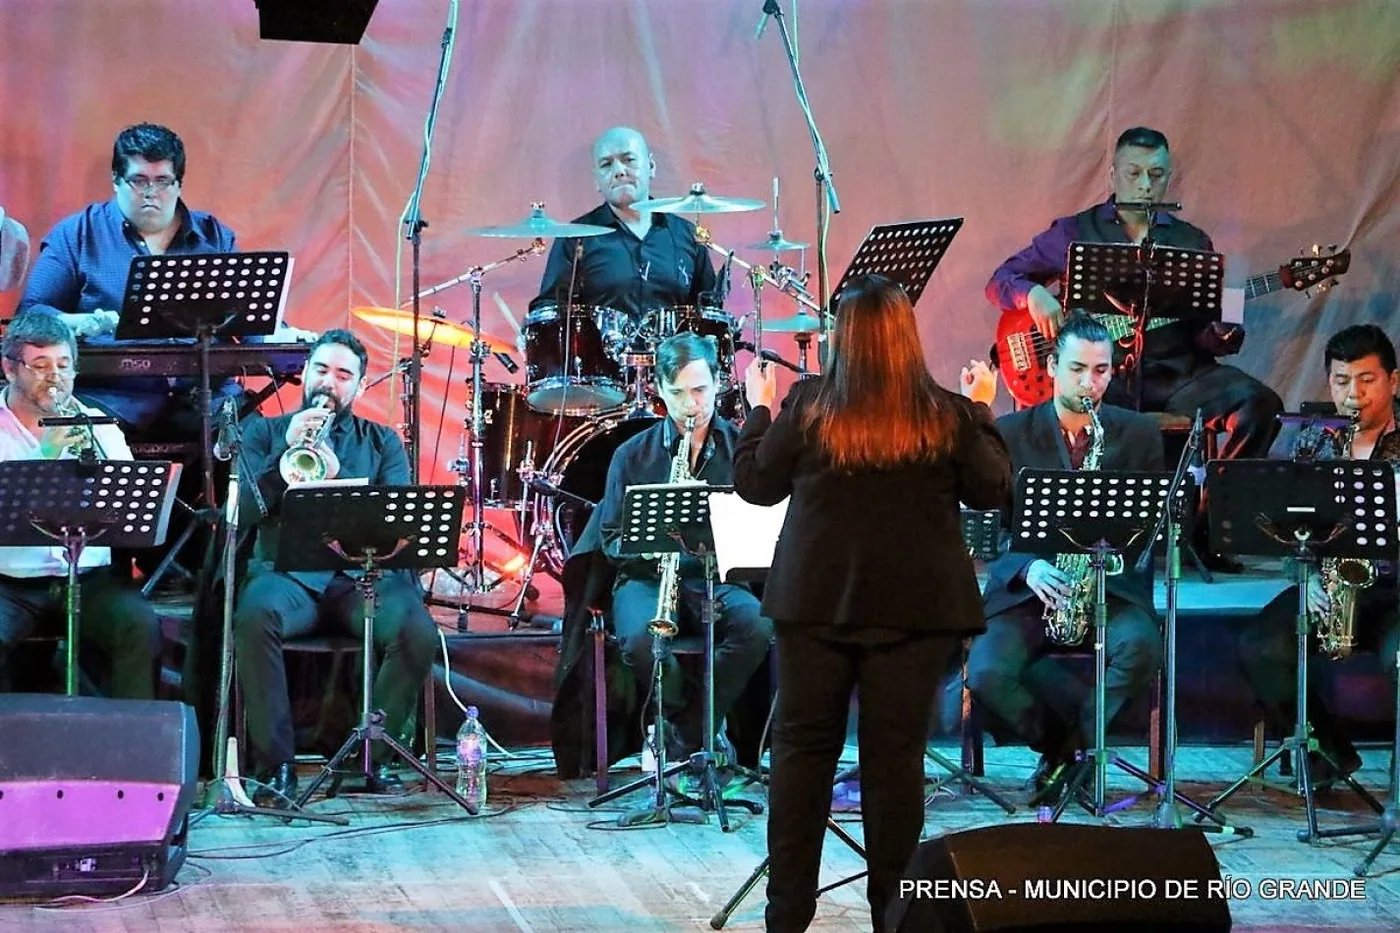 La banda de música ofreció un concierto en la Casa de la Cultura.